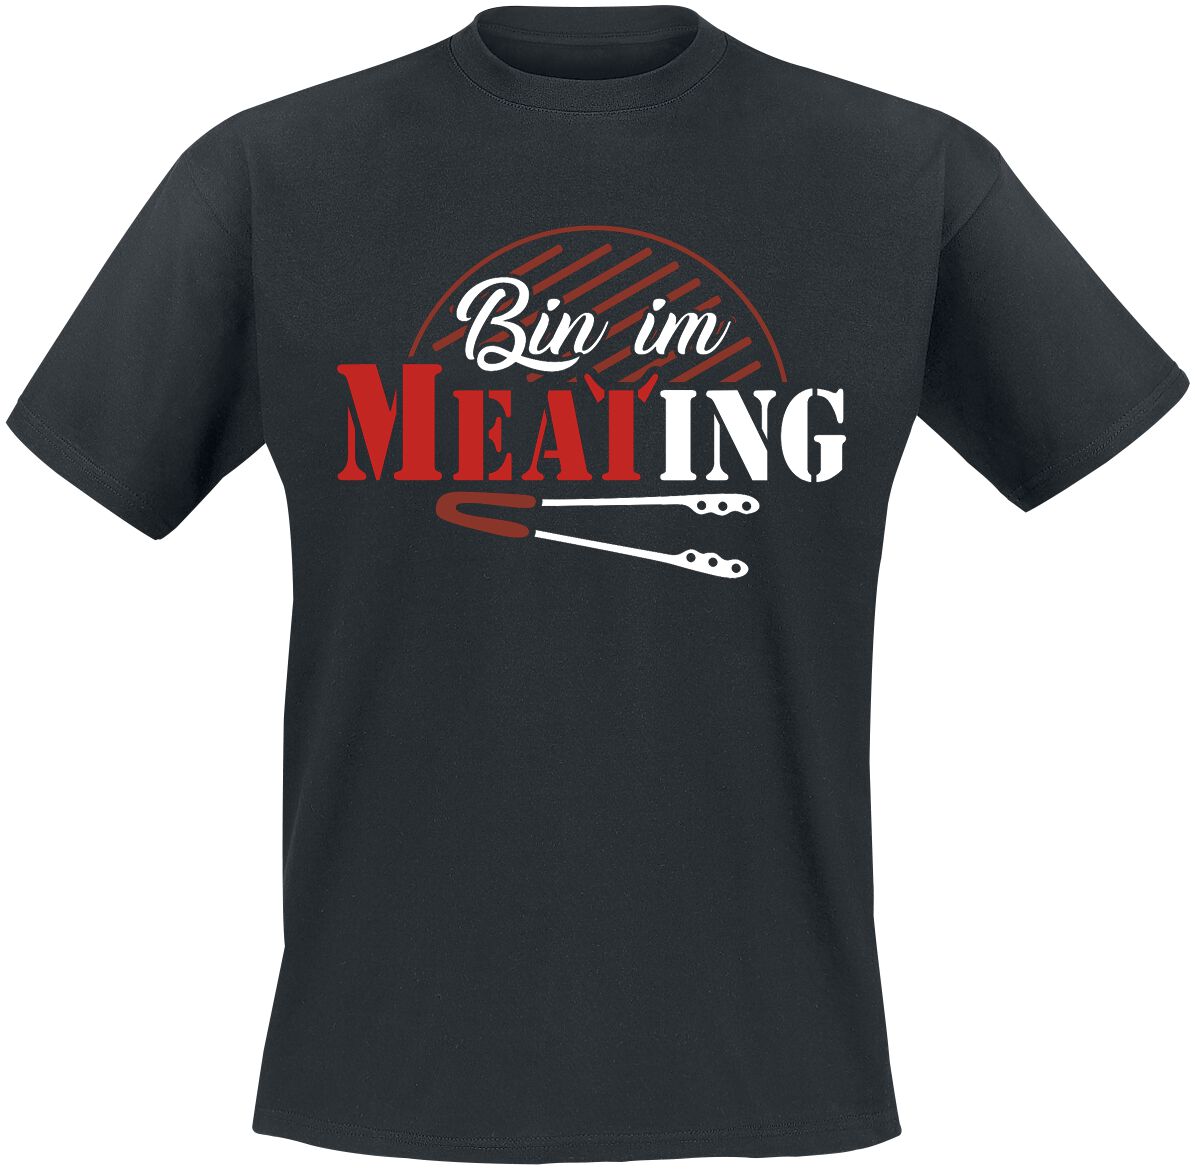 Food Bin im Meating T-Shirt schwarz in M